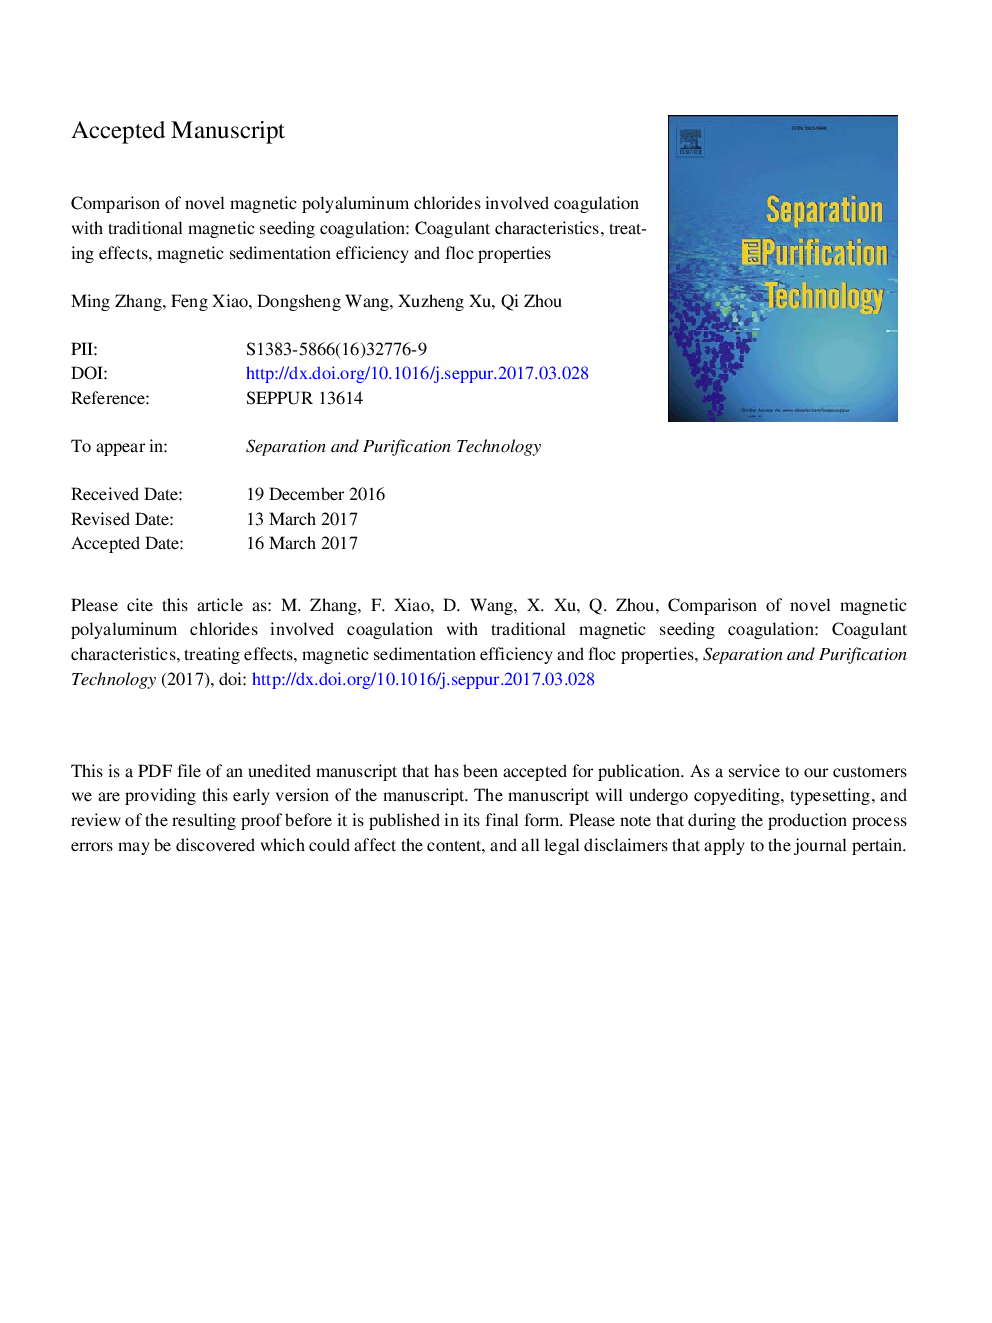 Comparison of novel magnetic polyaluminum chlorides involved coagulation with traditional magnetic seeding coagulation: Coagulant characteristics, treating effects, magnetic sedimentation efficiency and floc properties